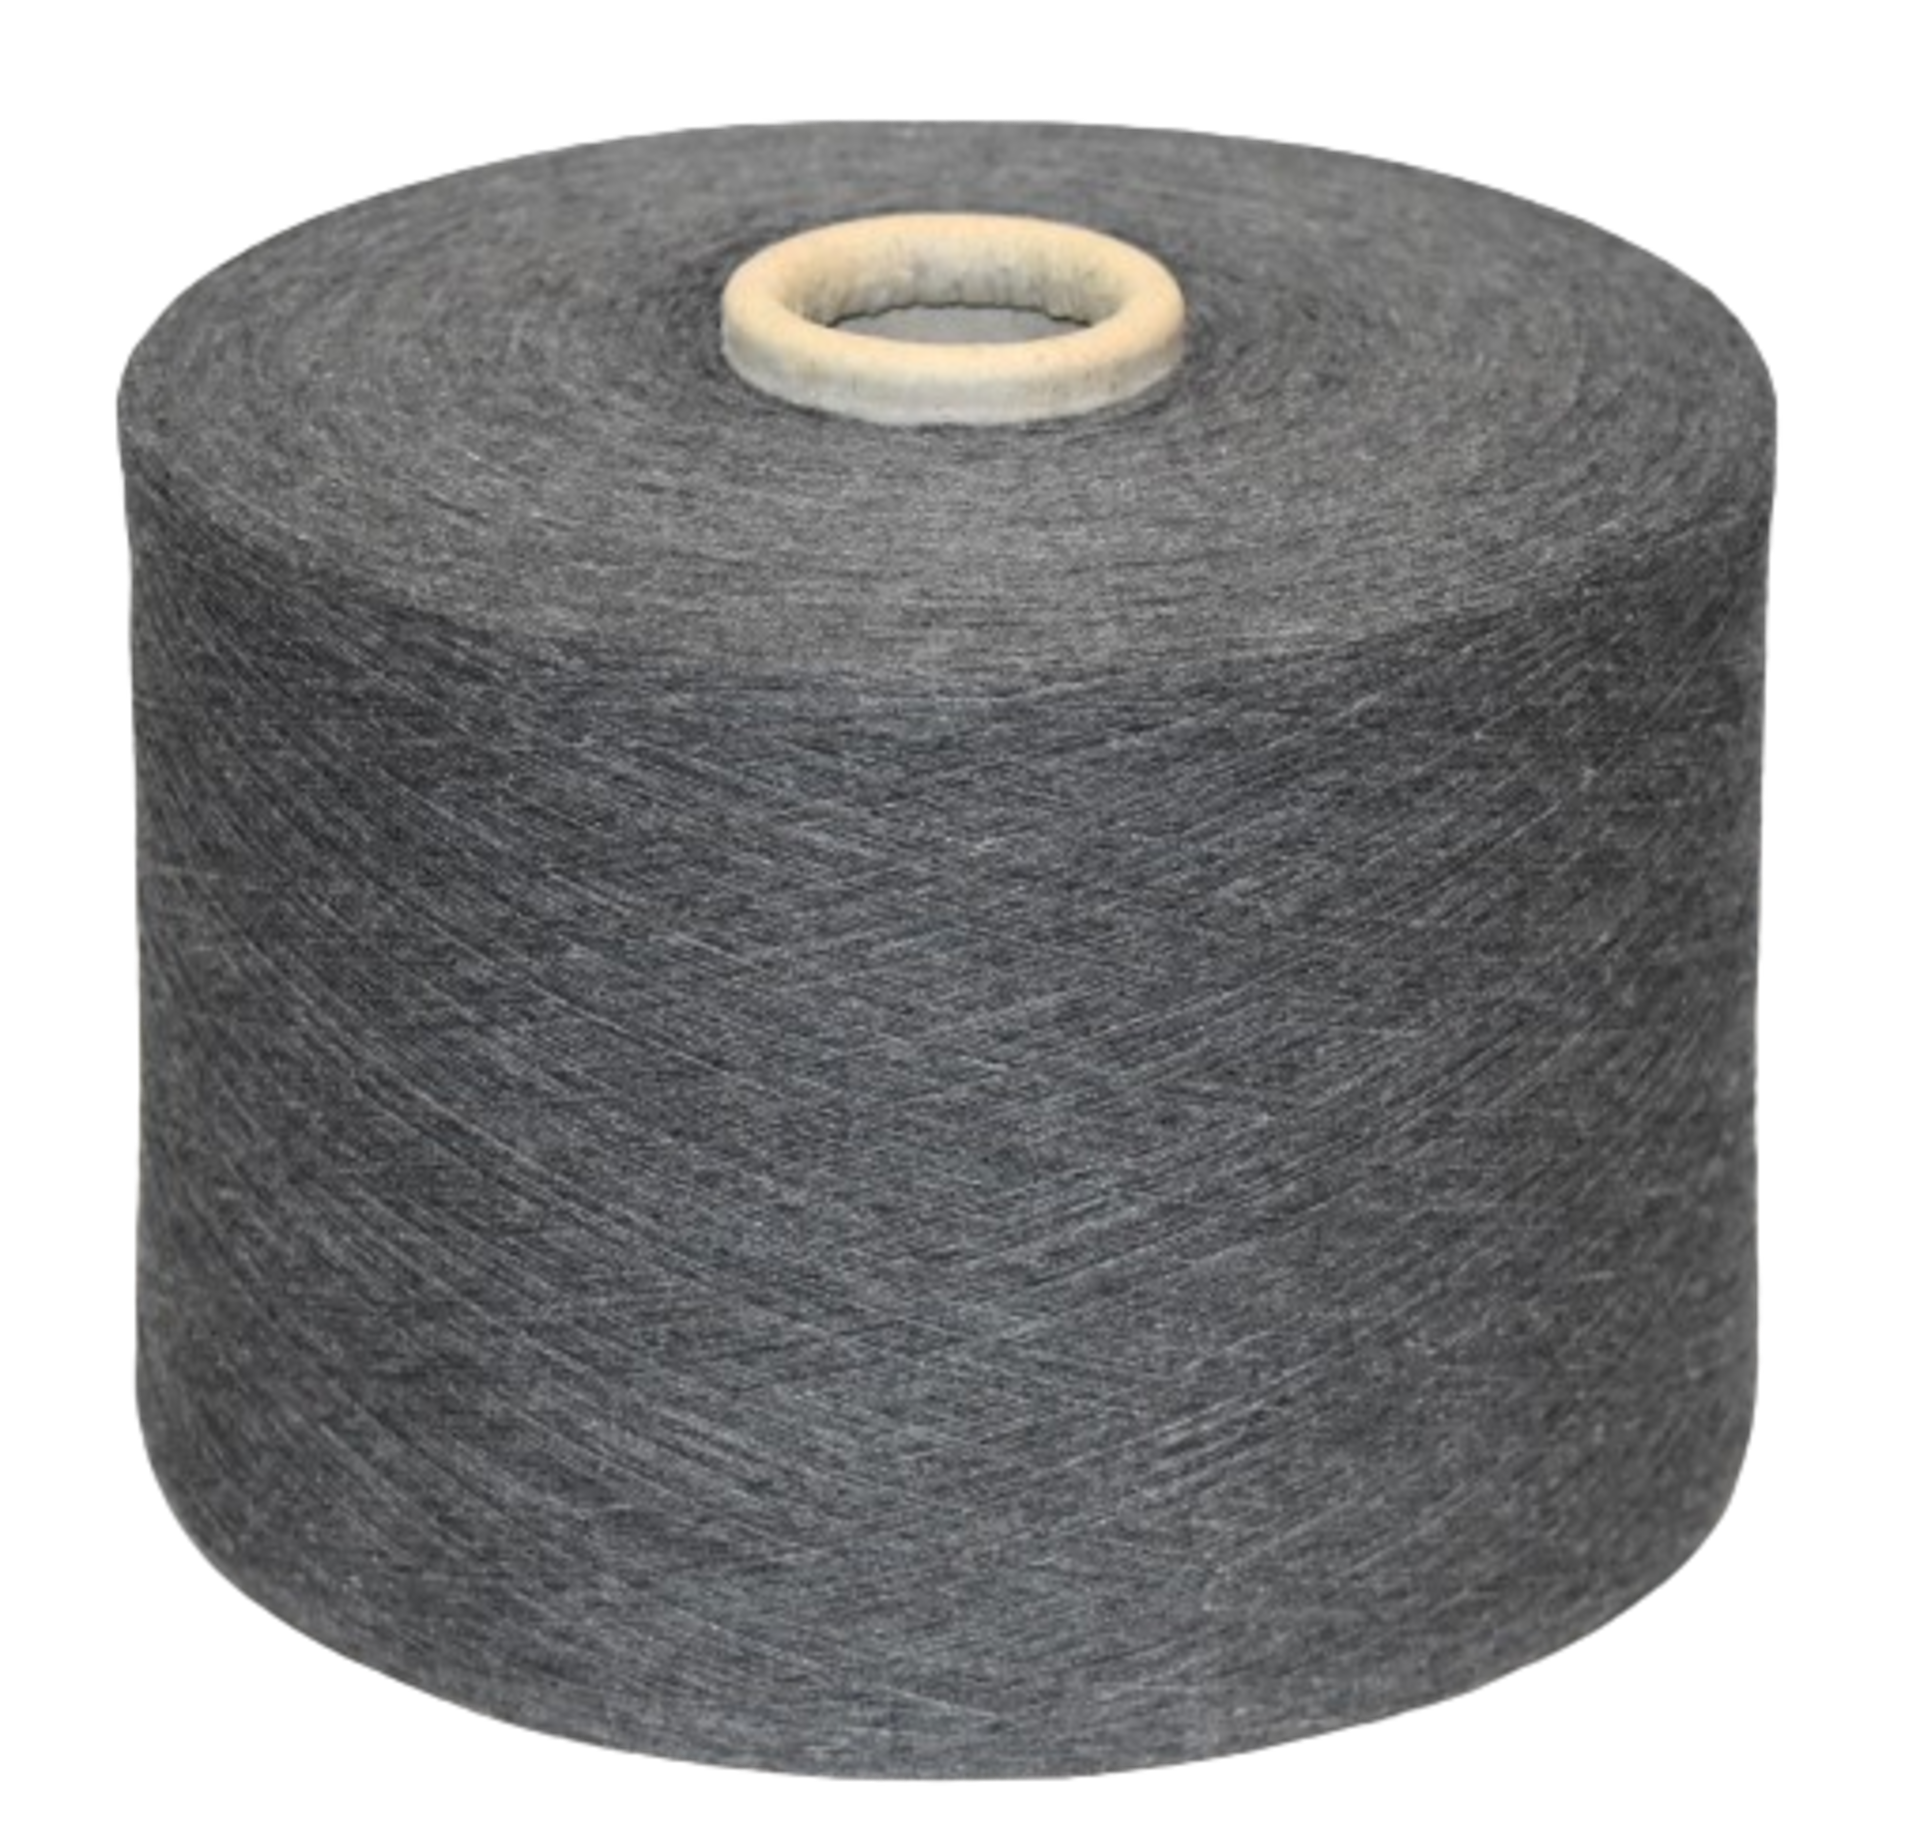 36 x Cones of 1/13 MicroCotton Knitting Yarn - Mid Grey - Approx Weight: 2,500g - New Stock ABL Yarn